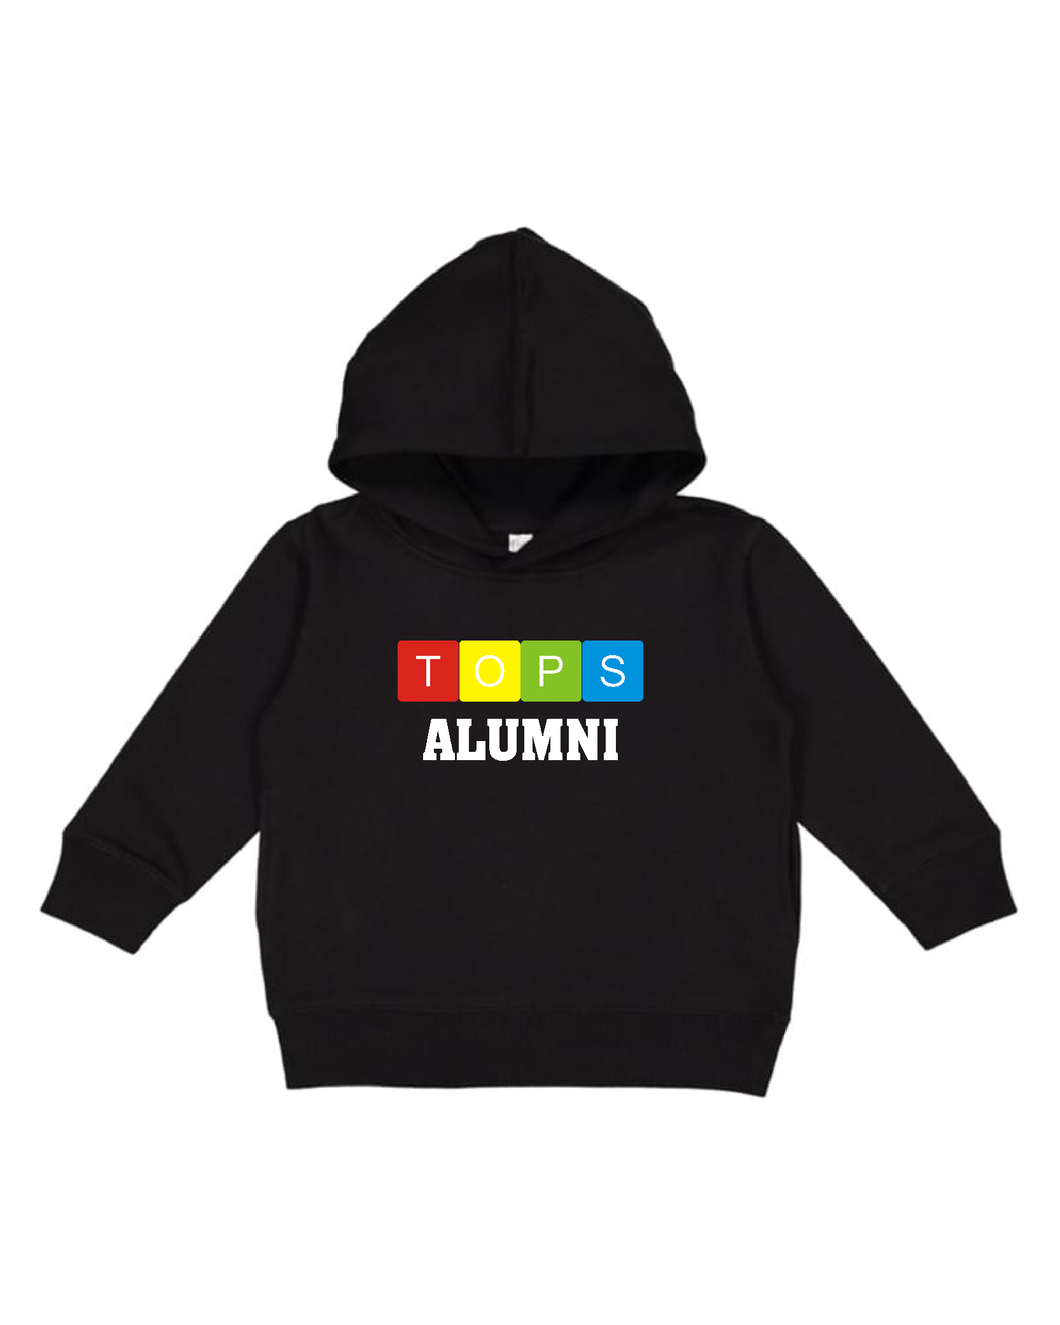 Toddler Hoodie - ALUMNI with TOPS Blocks Logo